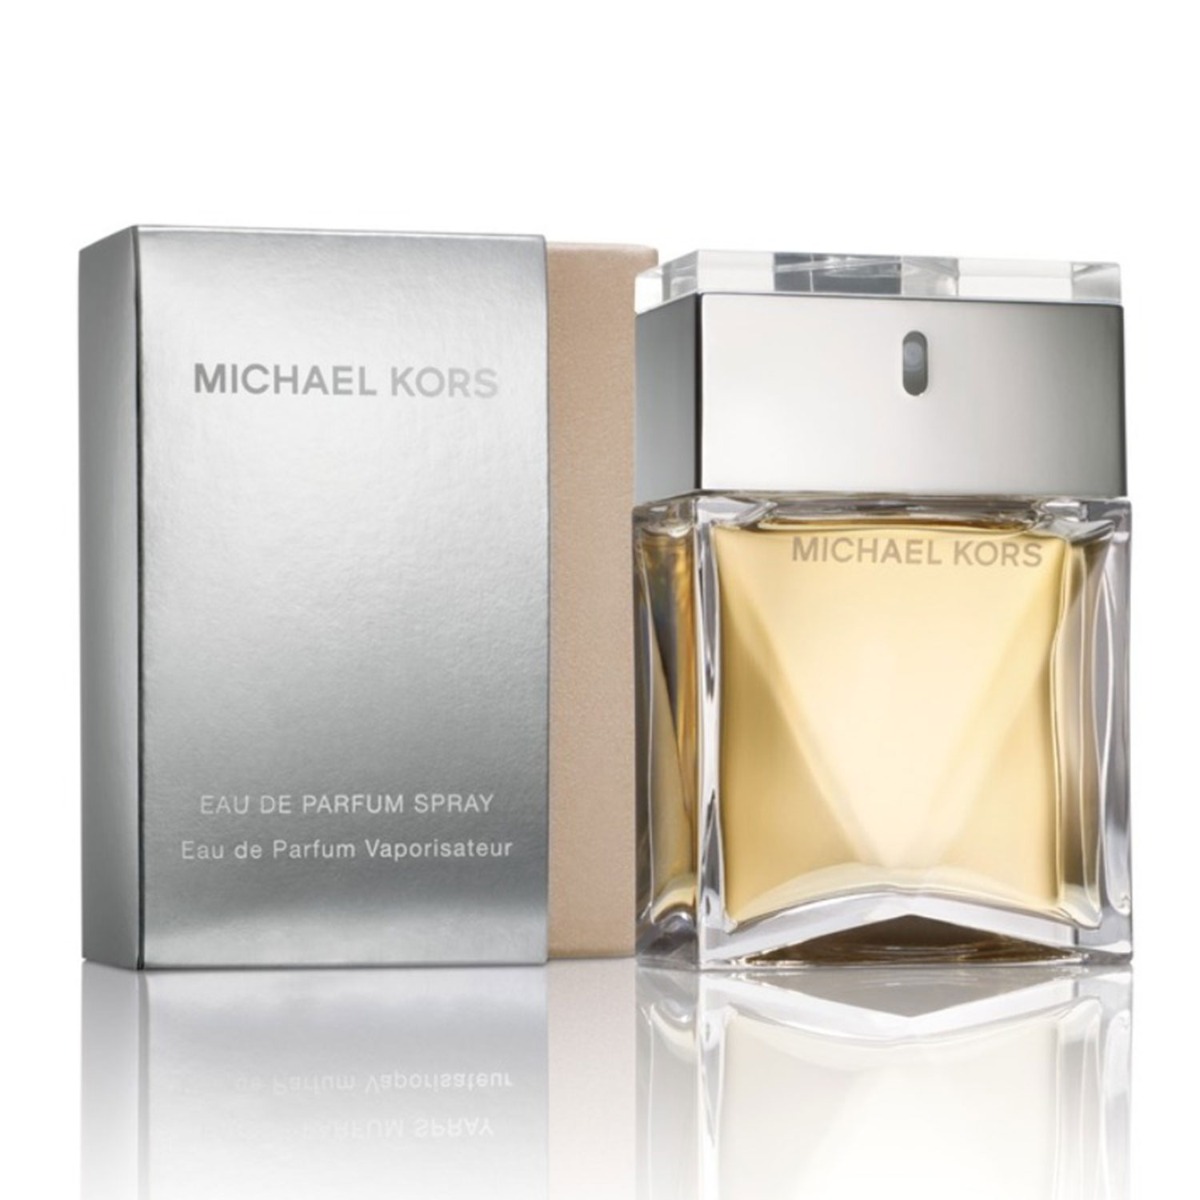  Michael Kors Women Eau de Parfum, 50ml